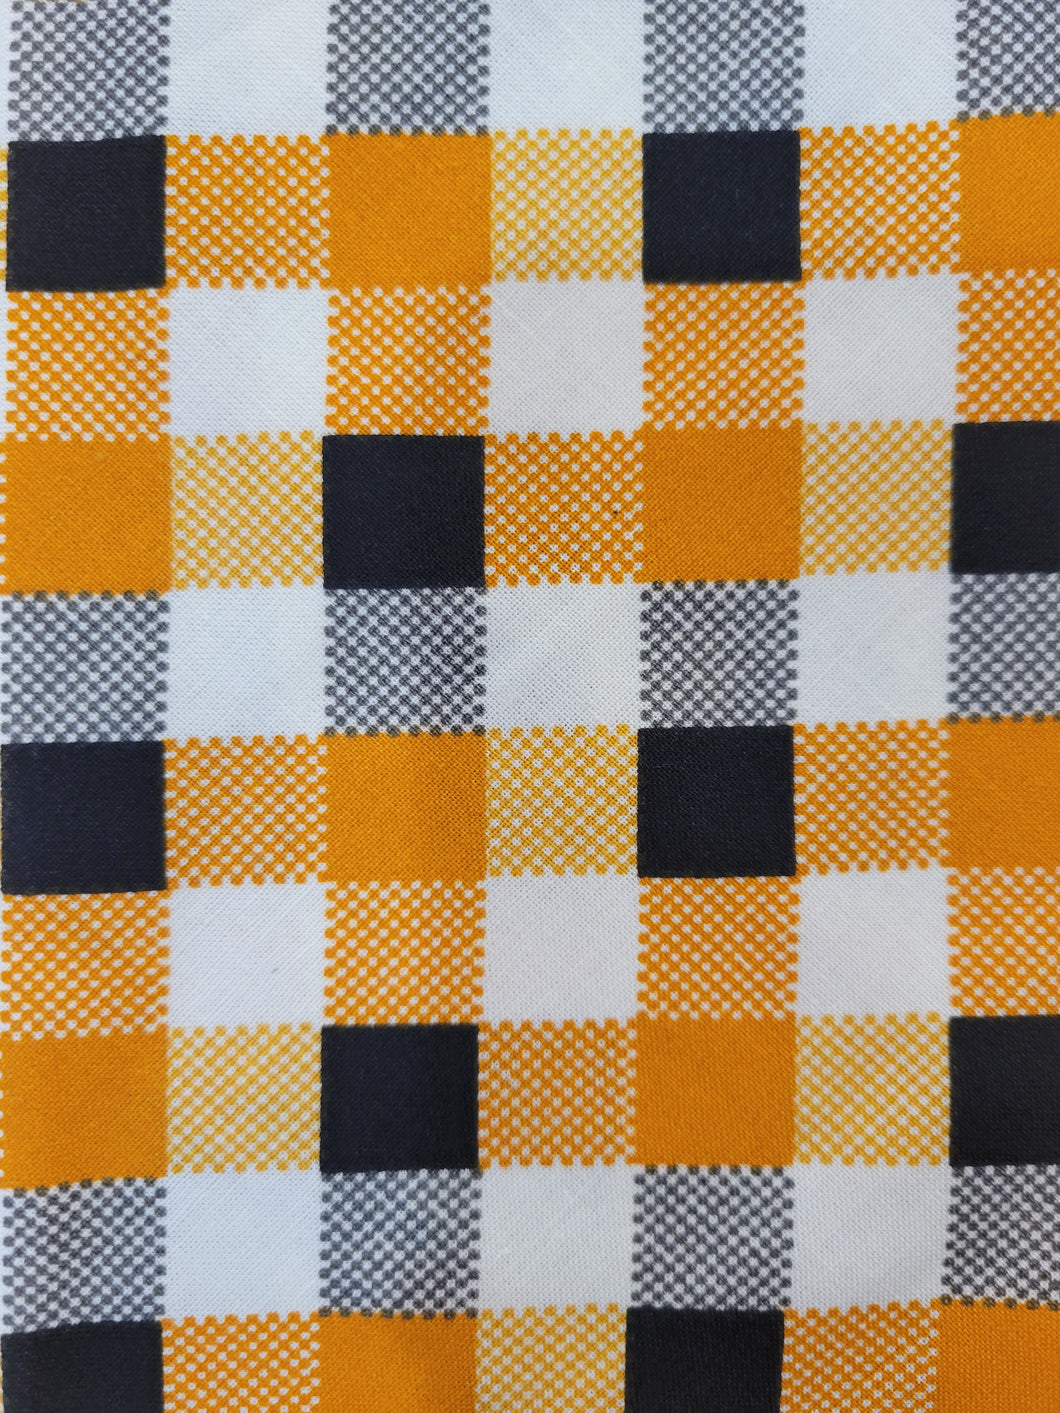 Orange/Black/Cream Checkered (EXTRA LARGE)